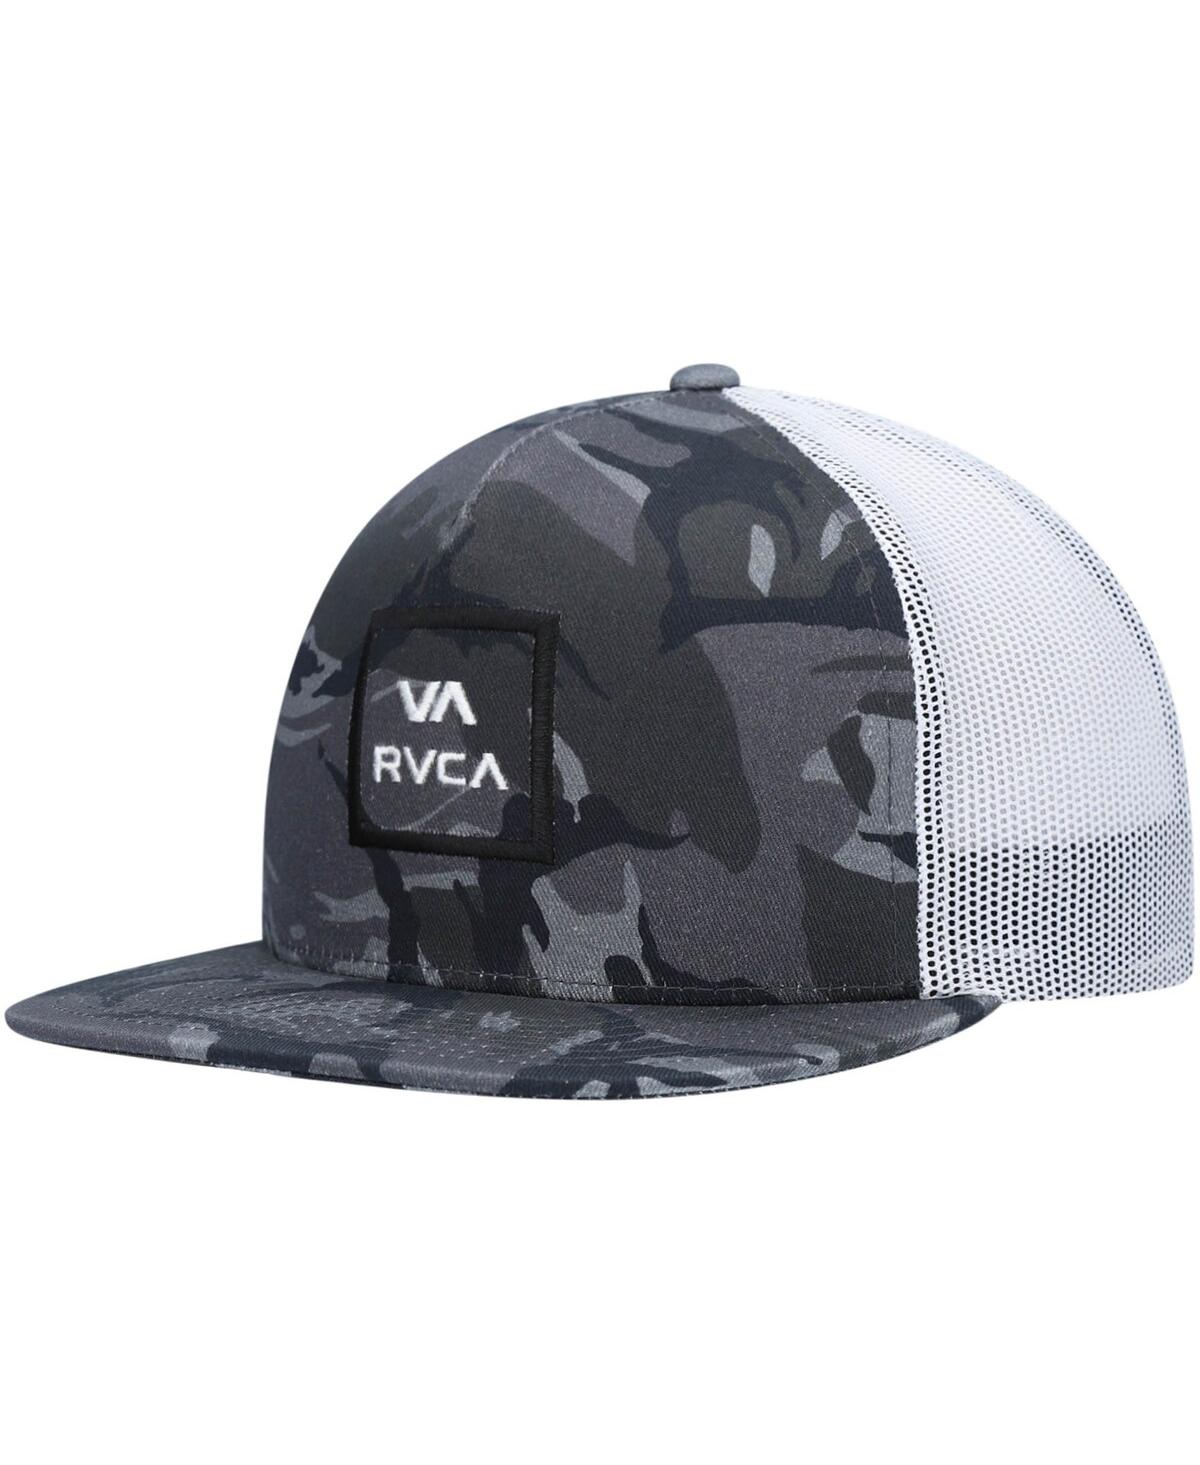 Rvca Kids' Boys Camo Va All The Way Trucker Adjustable Snapback Hat